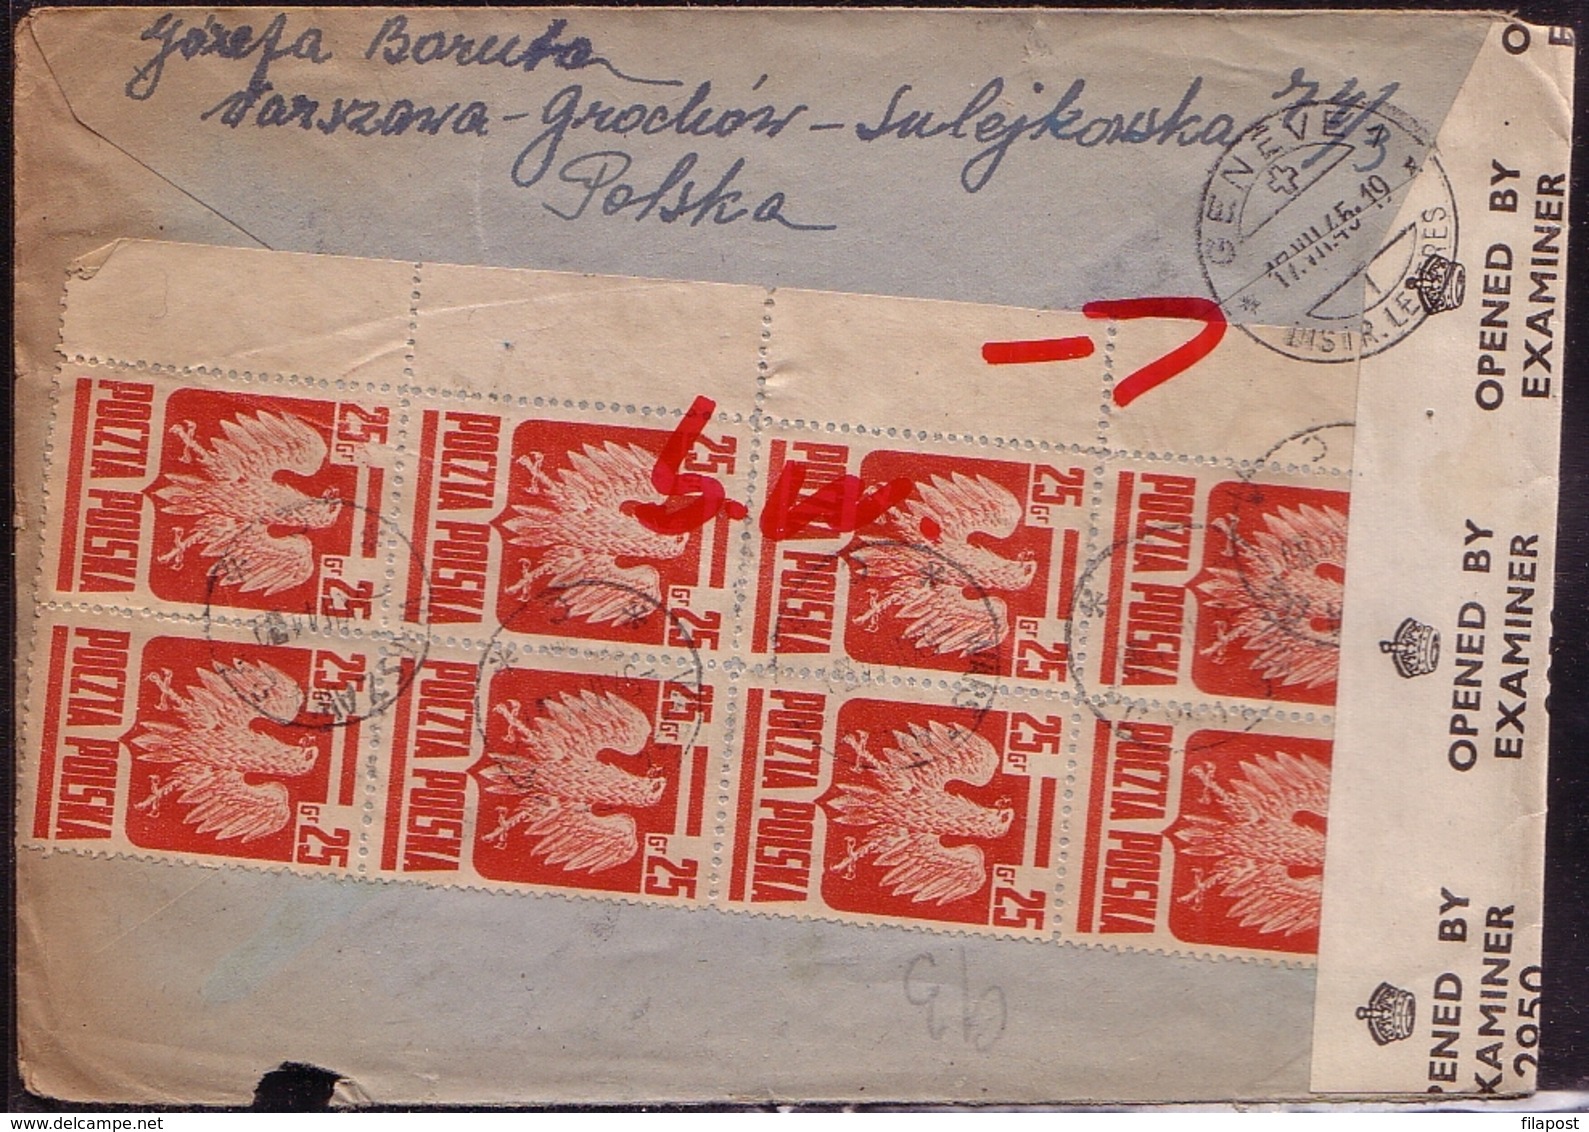 Poland 1944 Red Cross Letter From Poland To Geneva. Registered Letter Warsaw 16, Censor 5, XII. 1944, Stamps 383 - 8 V. - Verschlussmarken Der Befreiung